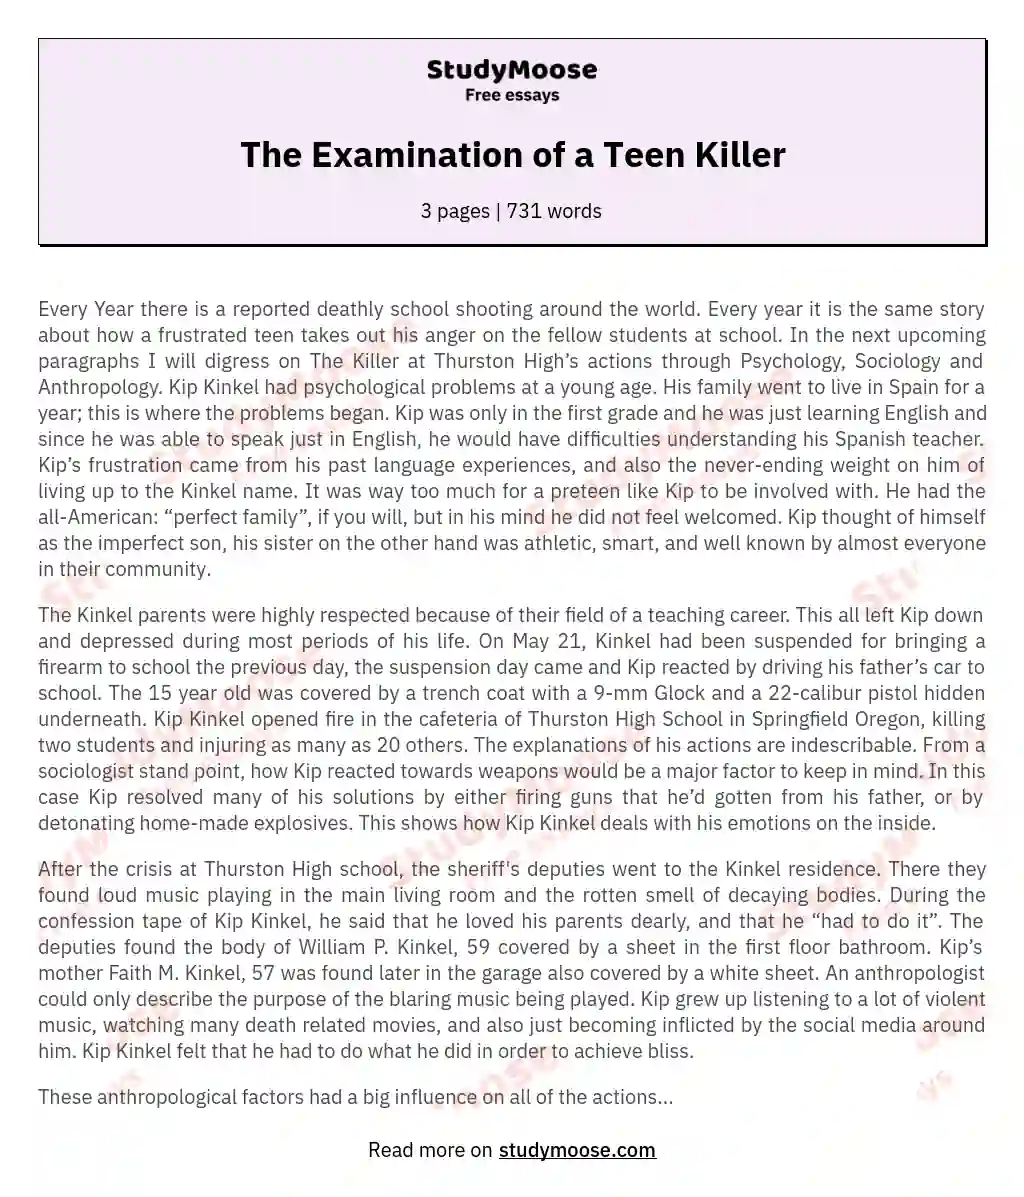 The Examination of a Teen Killer essay